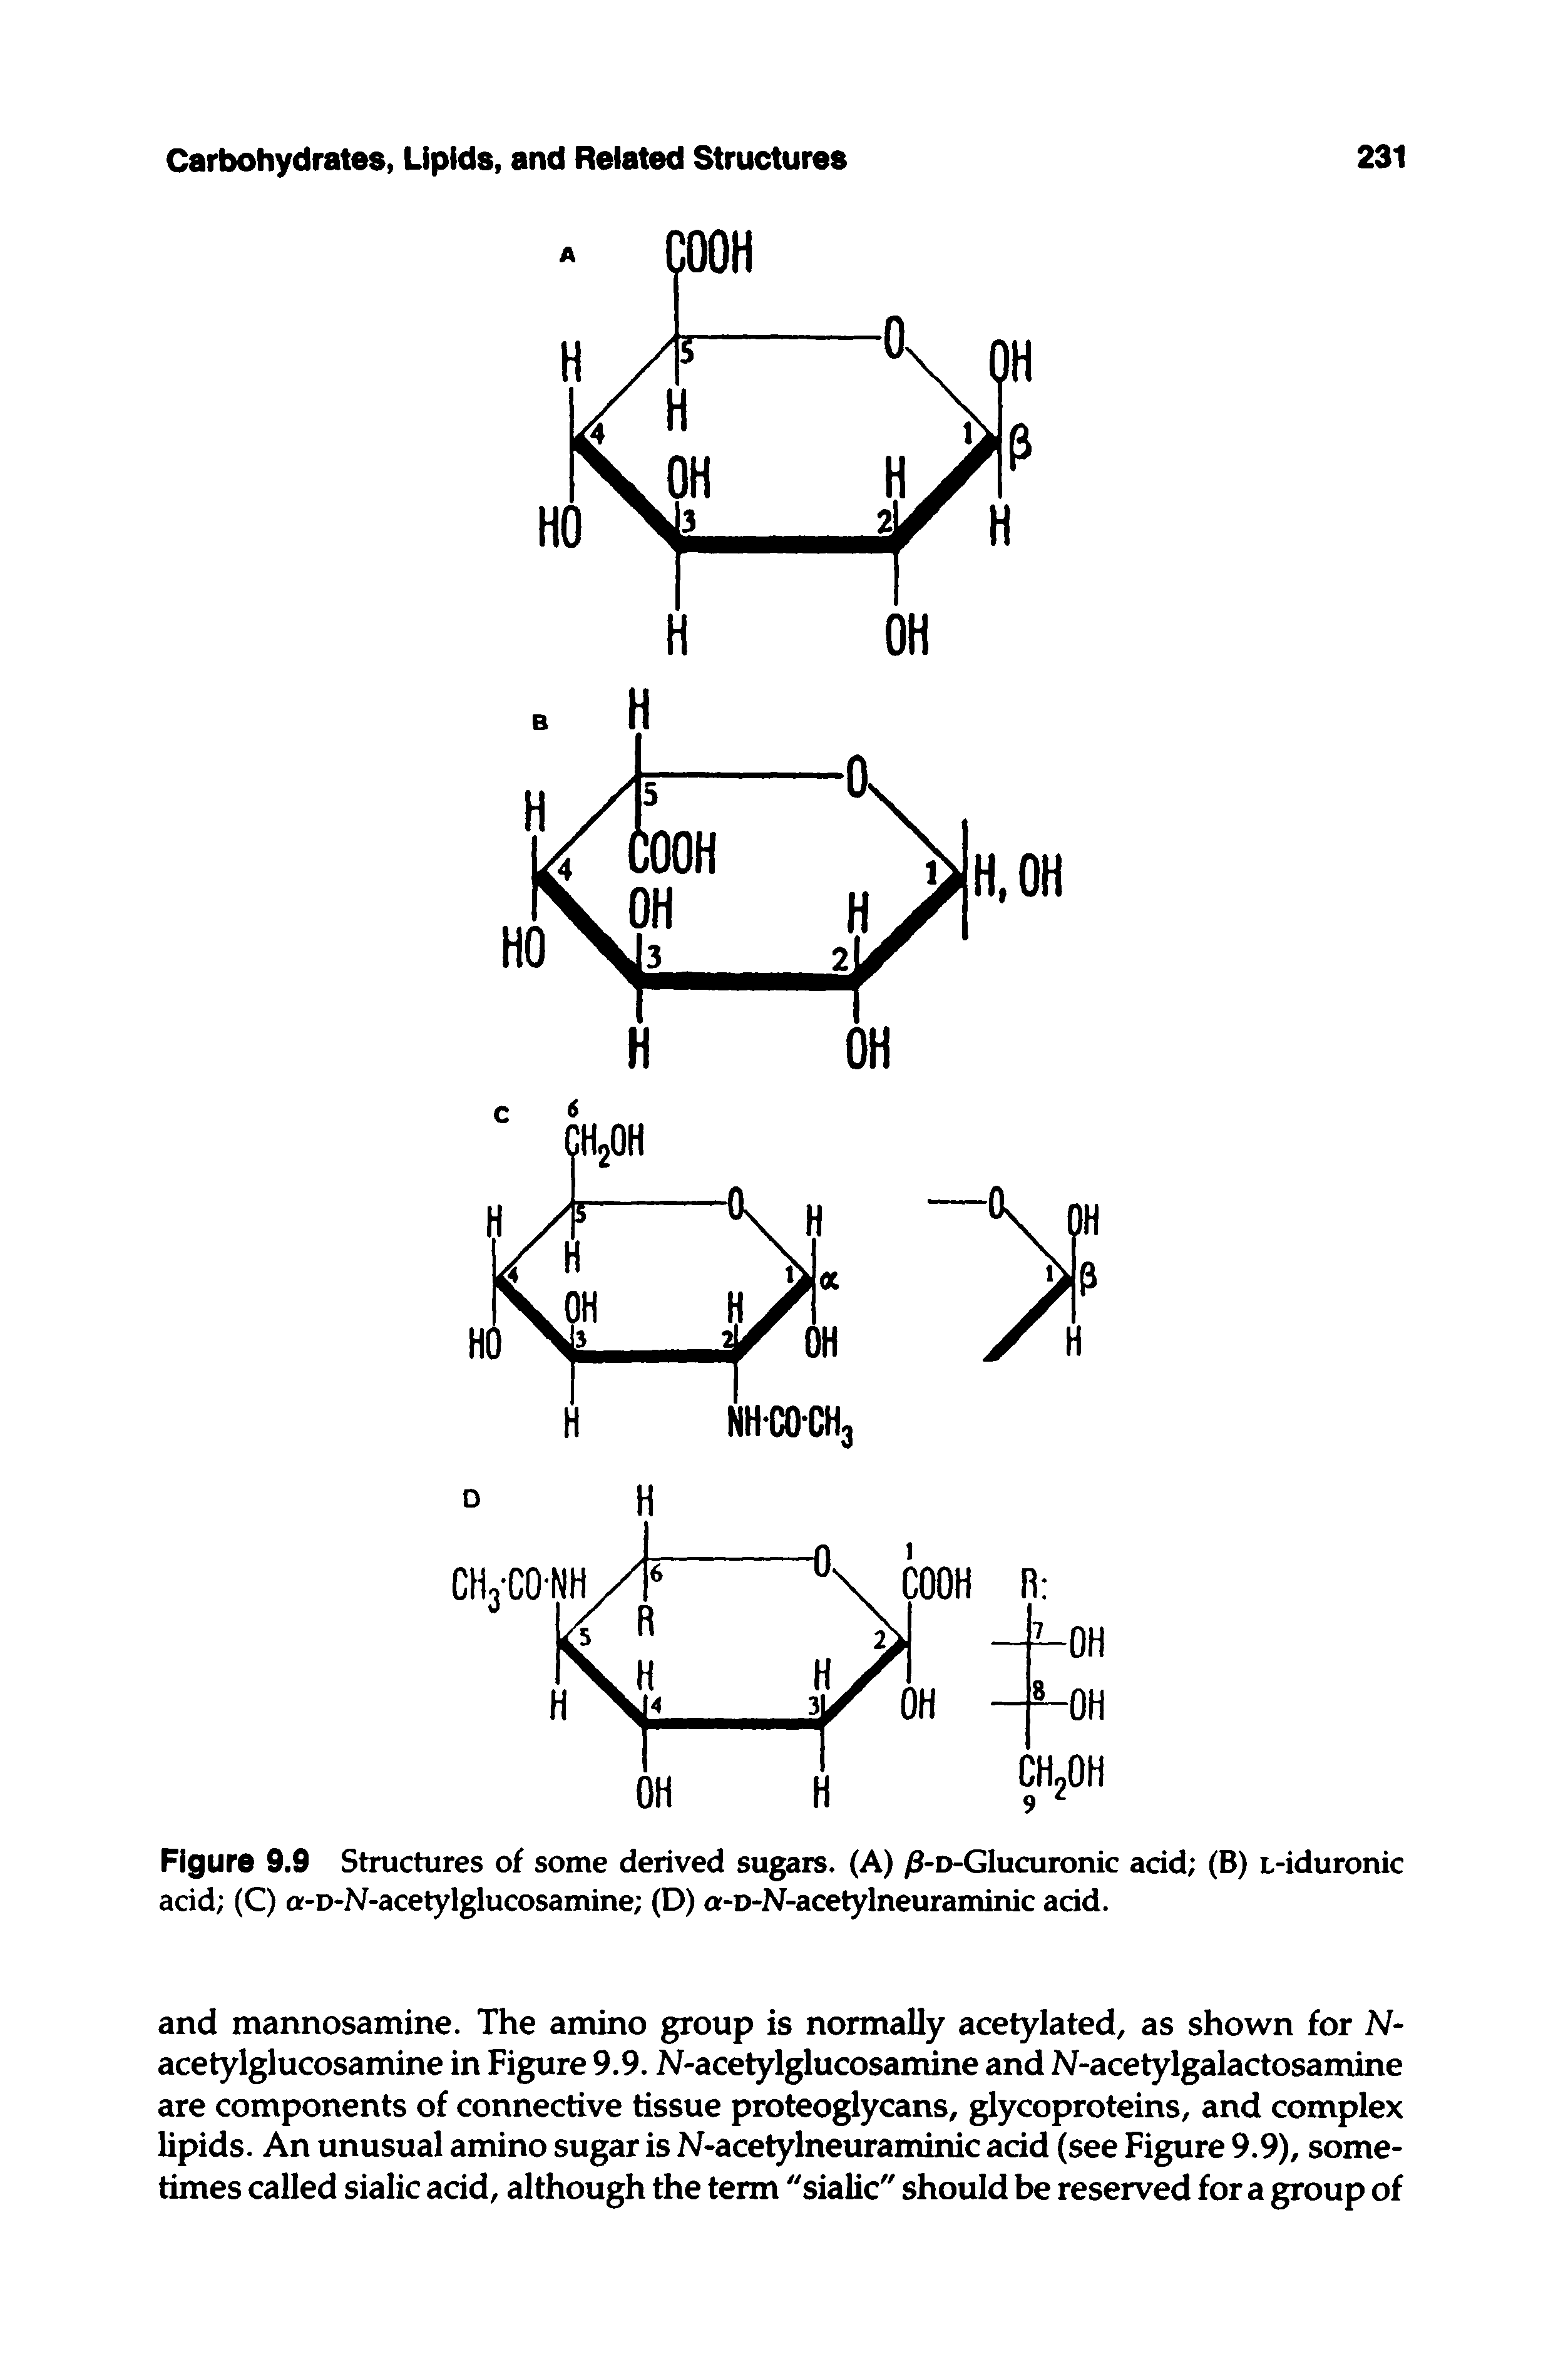 Figure 9.9 Structures of some derived sugars. (A) /3-D-Glucuronic acid (B) L-iduronic acid (C) a-D-N-acetylglucosamine (D) a-D-N-acetylneuraminic acid.